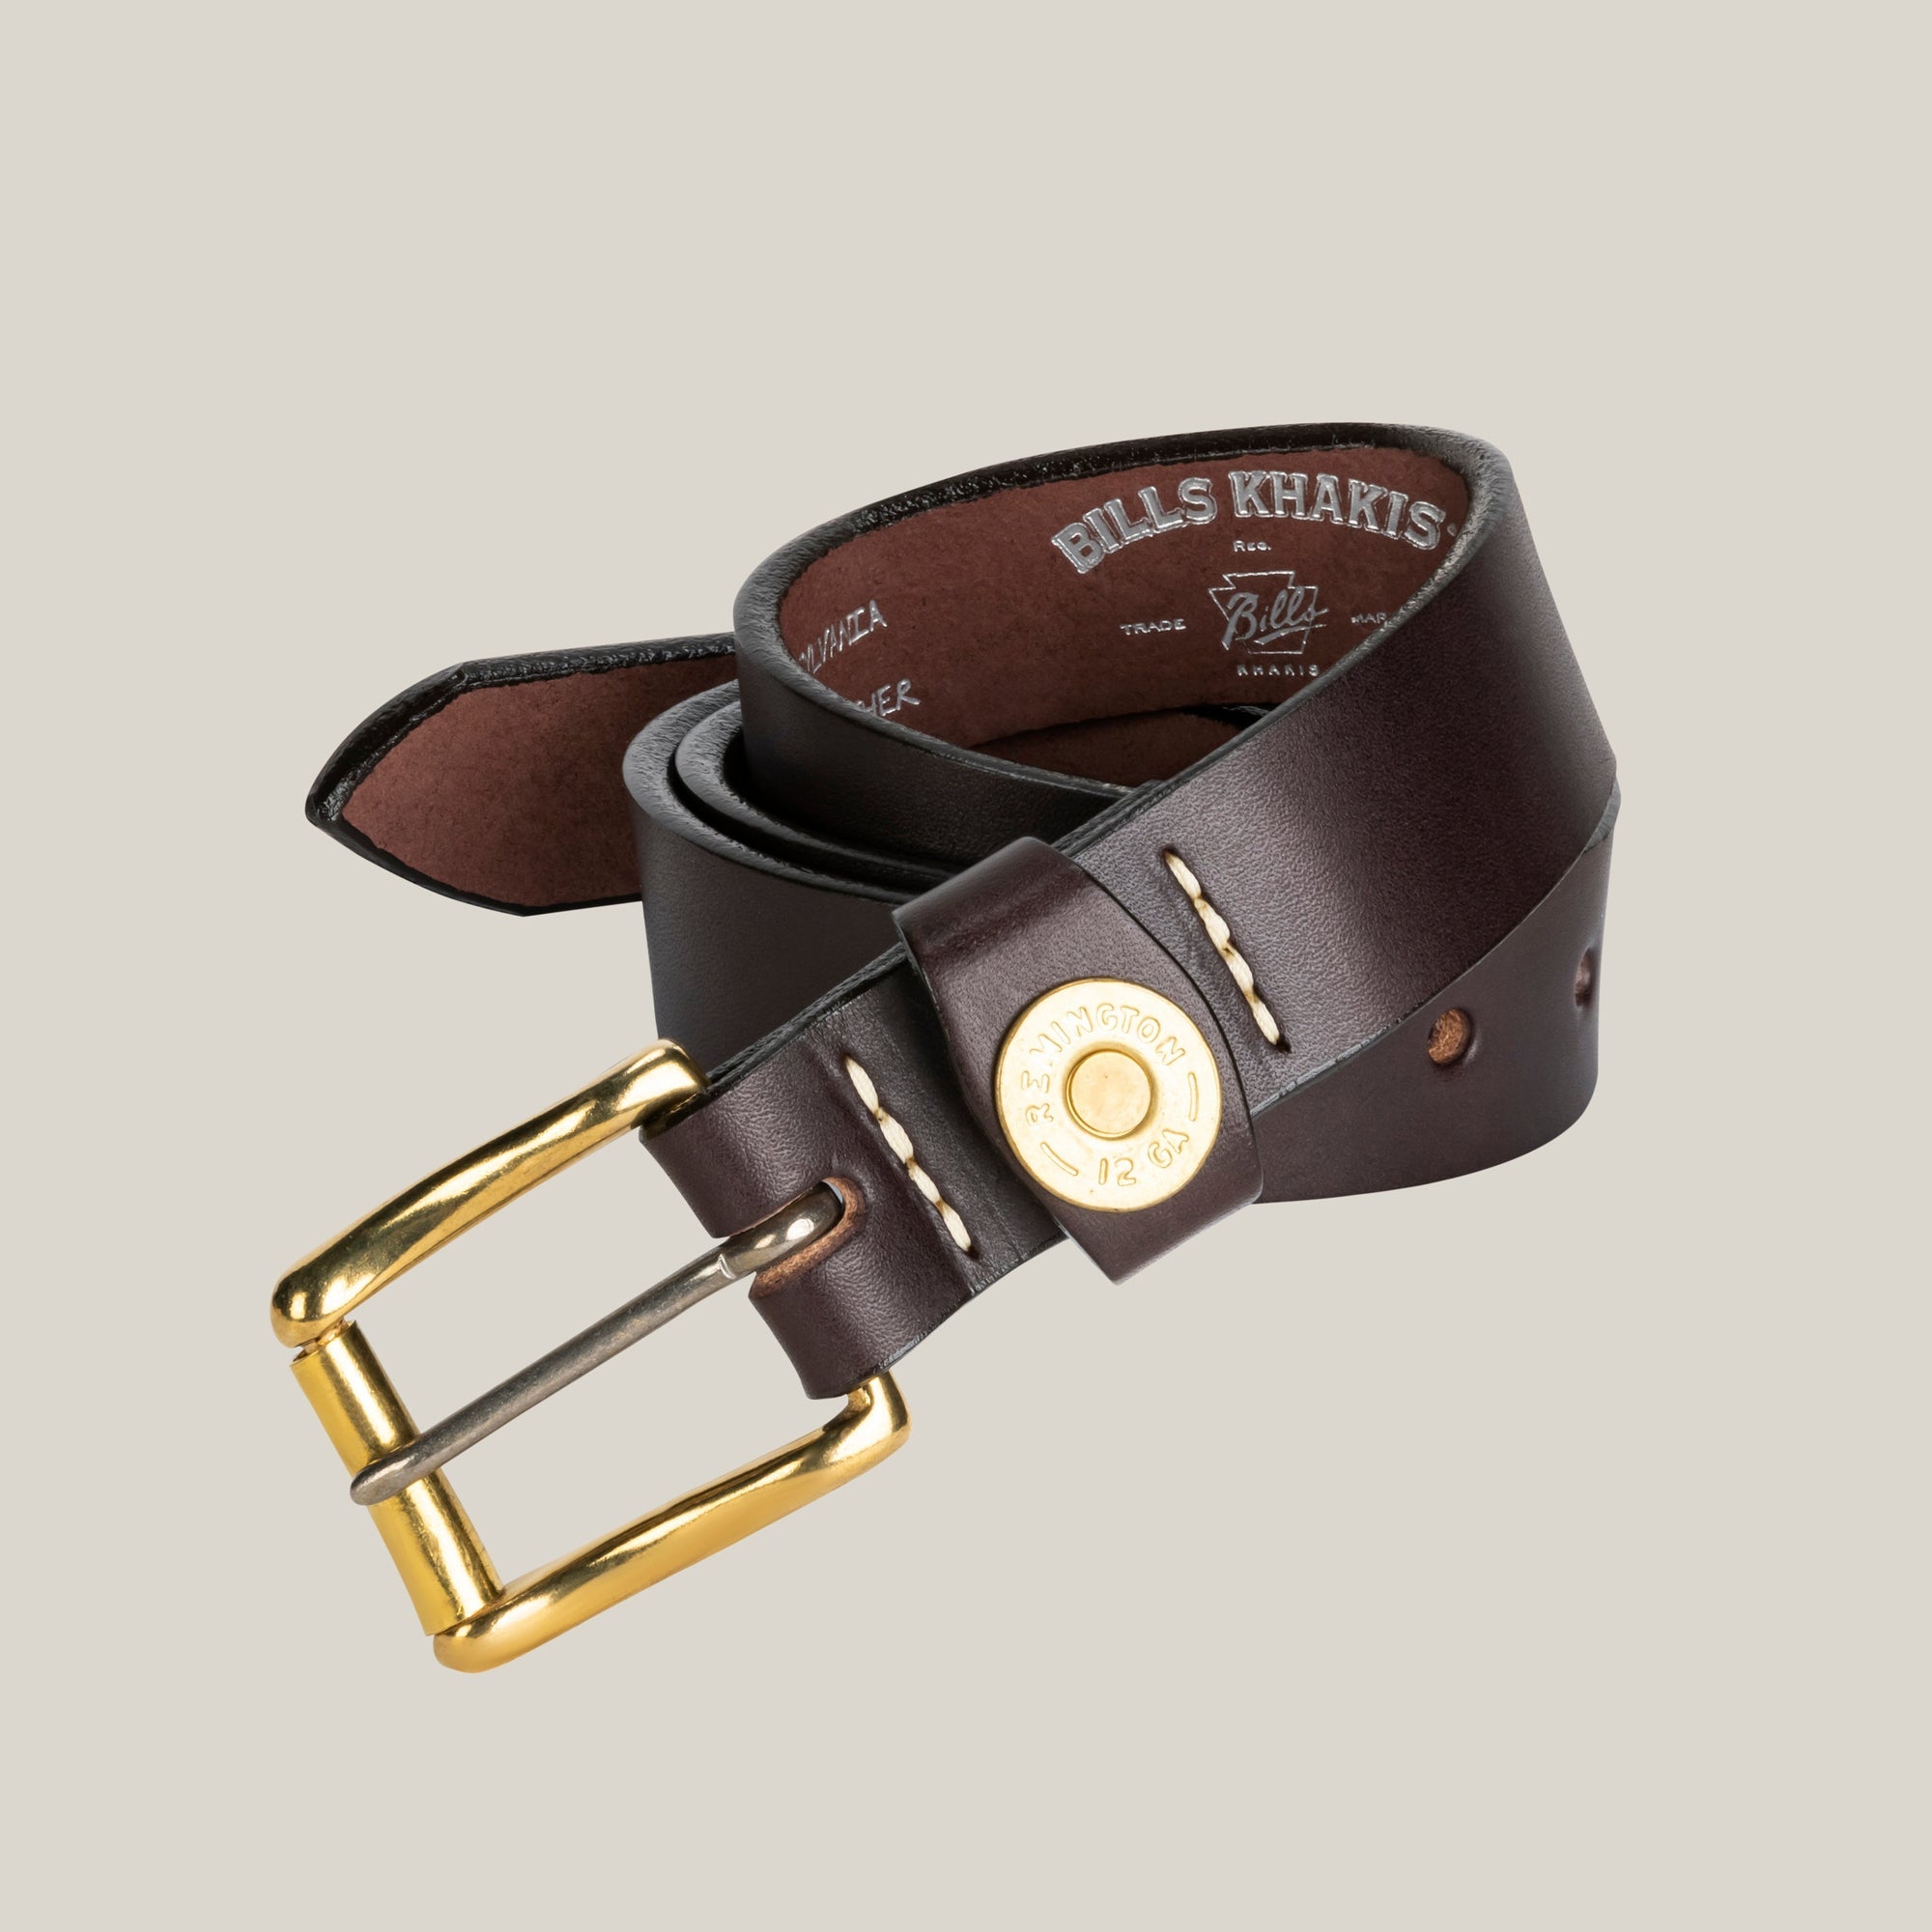 Shotgun Shell Leather Belt in Brown by Bills Khakis